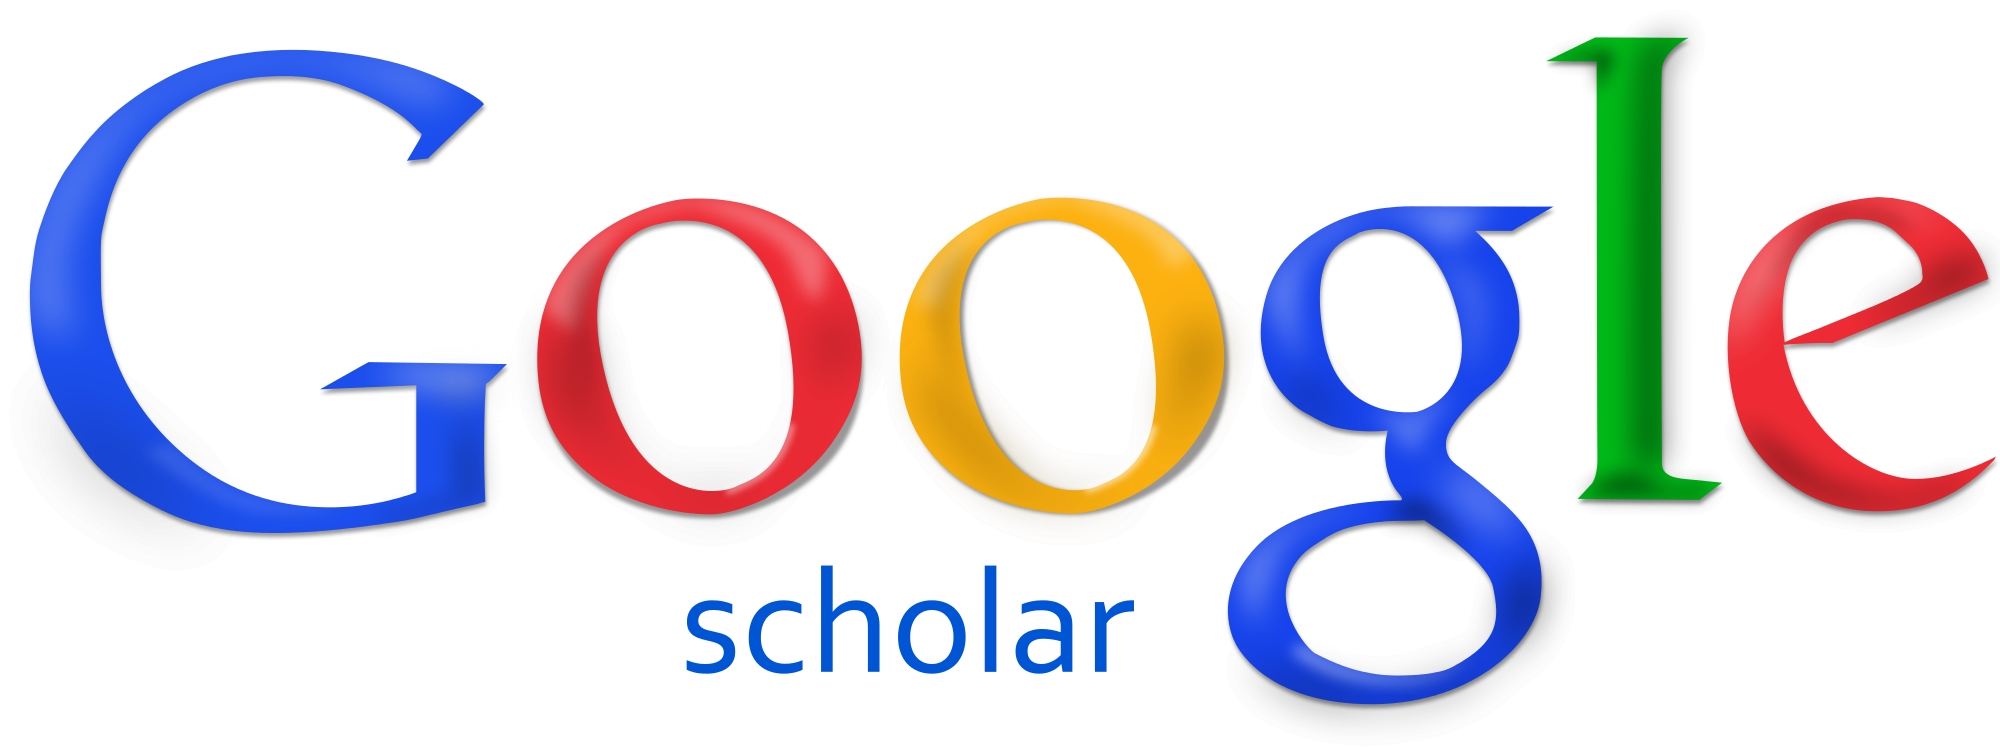 Google scholar logo